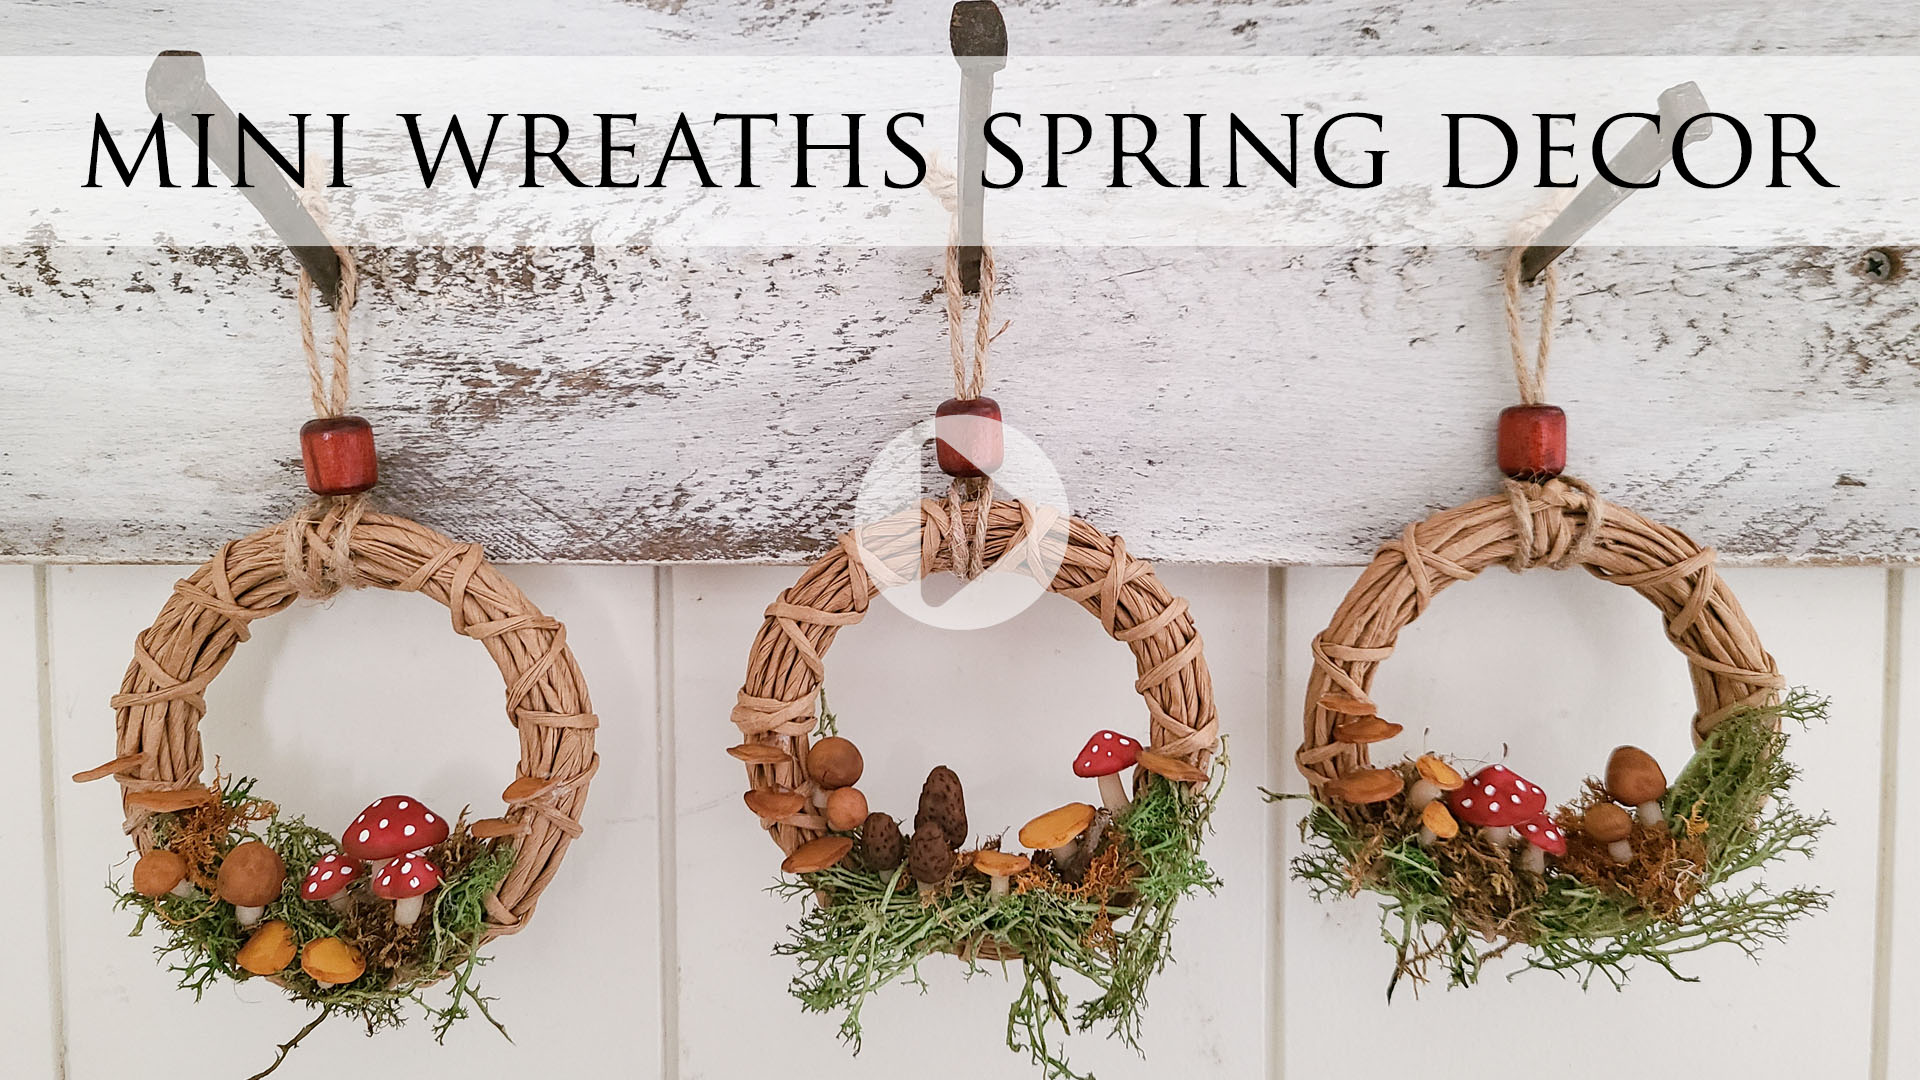 Showcase Mini Wreaths Spring Decor Video Tutorial by Larissa of Prodigal Pieces | prodigalpieces.com #prodigalpieces